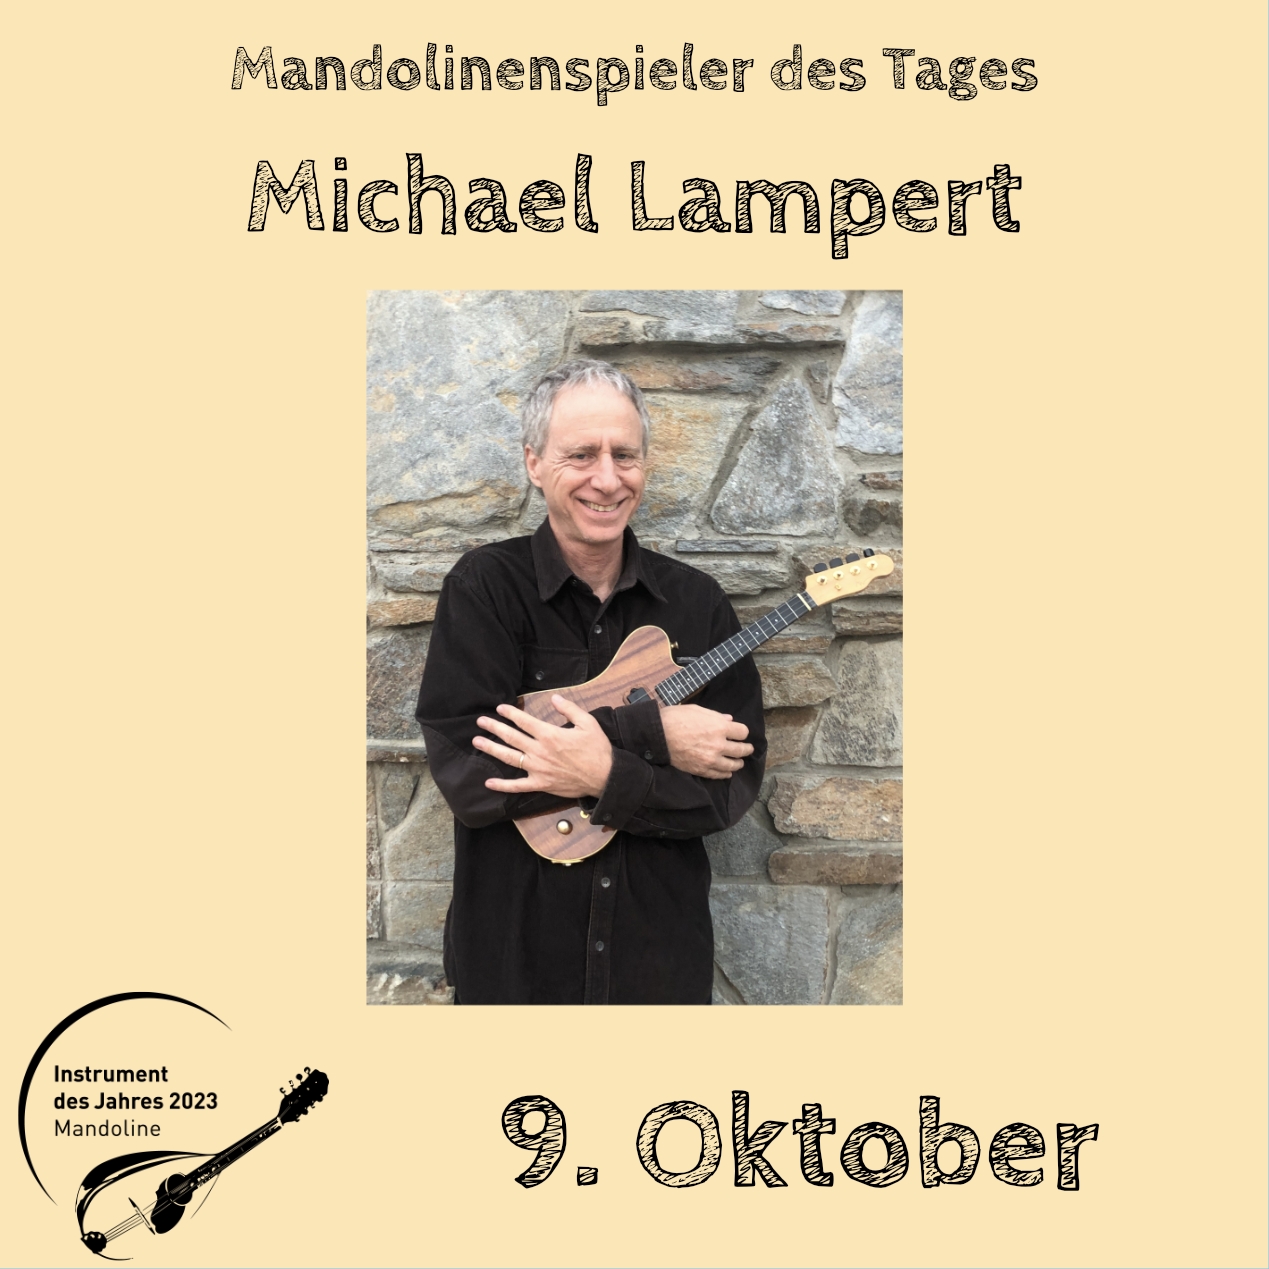 9. Oktober - Michael Lampert Instrument des Jahres 2023 Mandolinenspieler Mandolinenspielerin des Tages